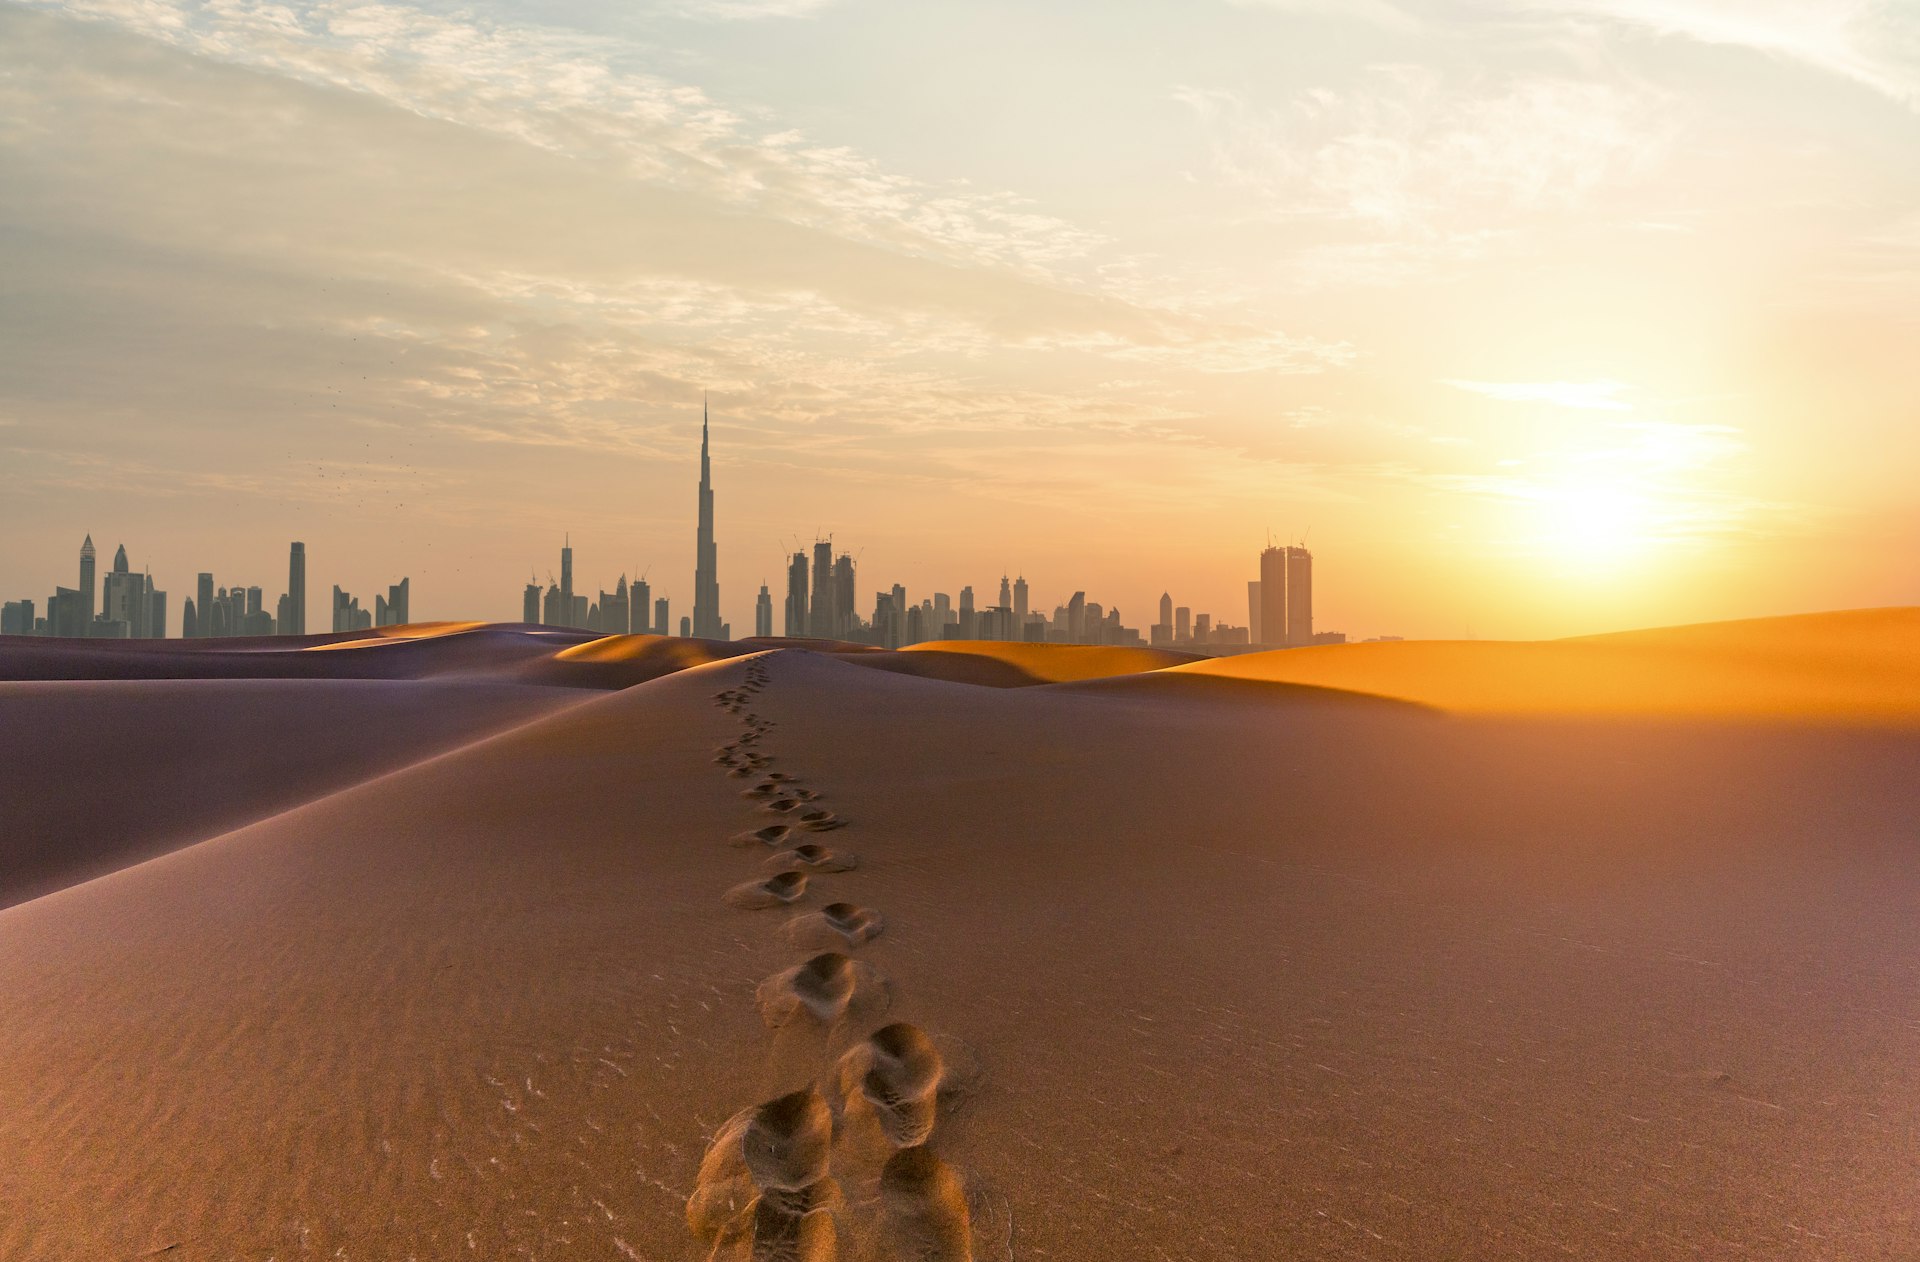 Footsteps in desert sand heading towards skyscrapers of the Dubai city skyline at daw